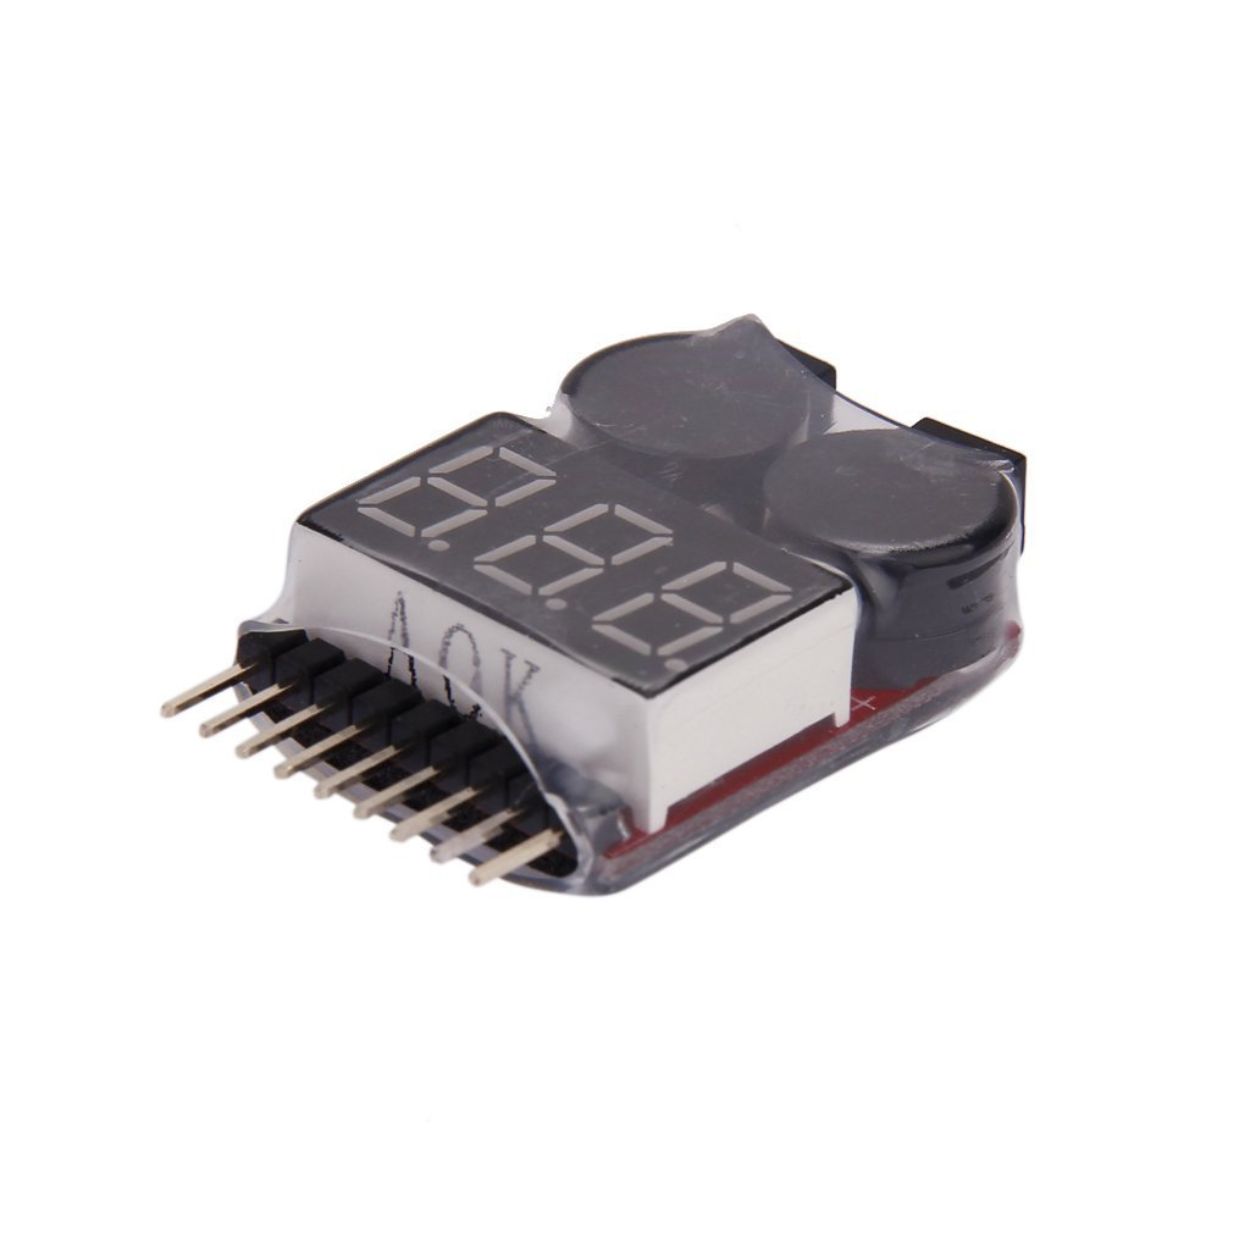 1-8S Lipo / Li-ion Battery Voltage Tester 2IN1 Low Voltage Buzzer Alarm